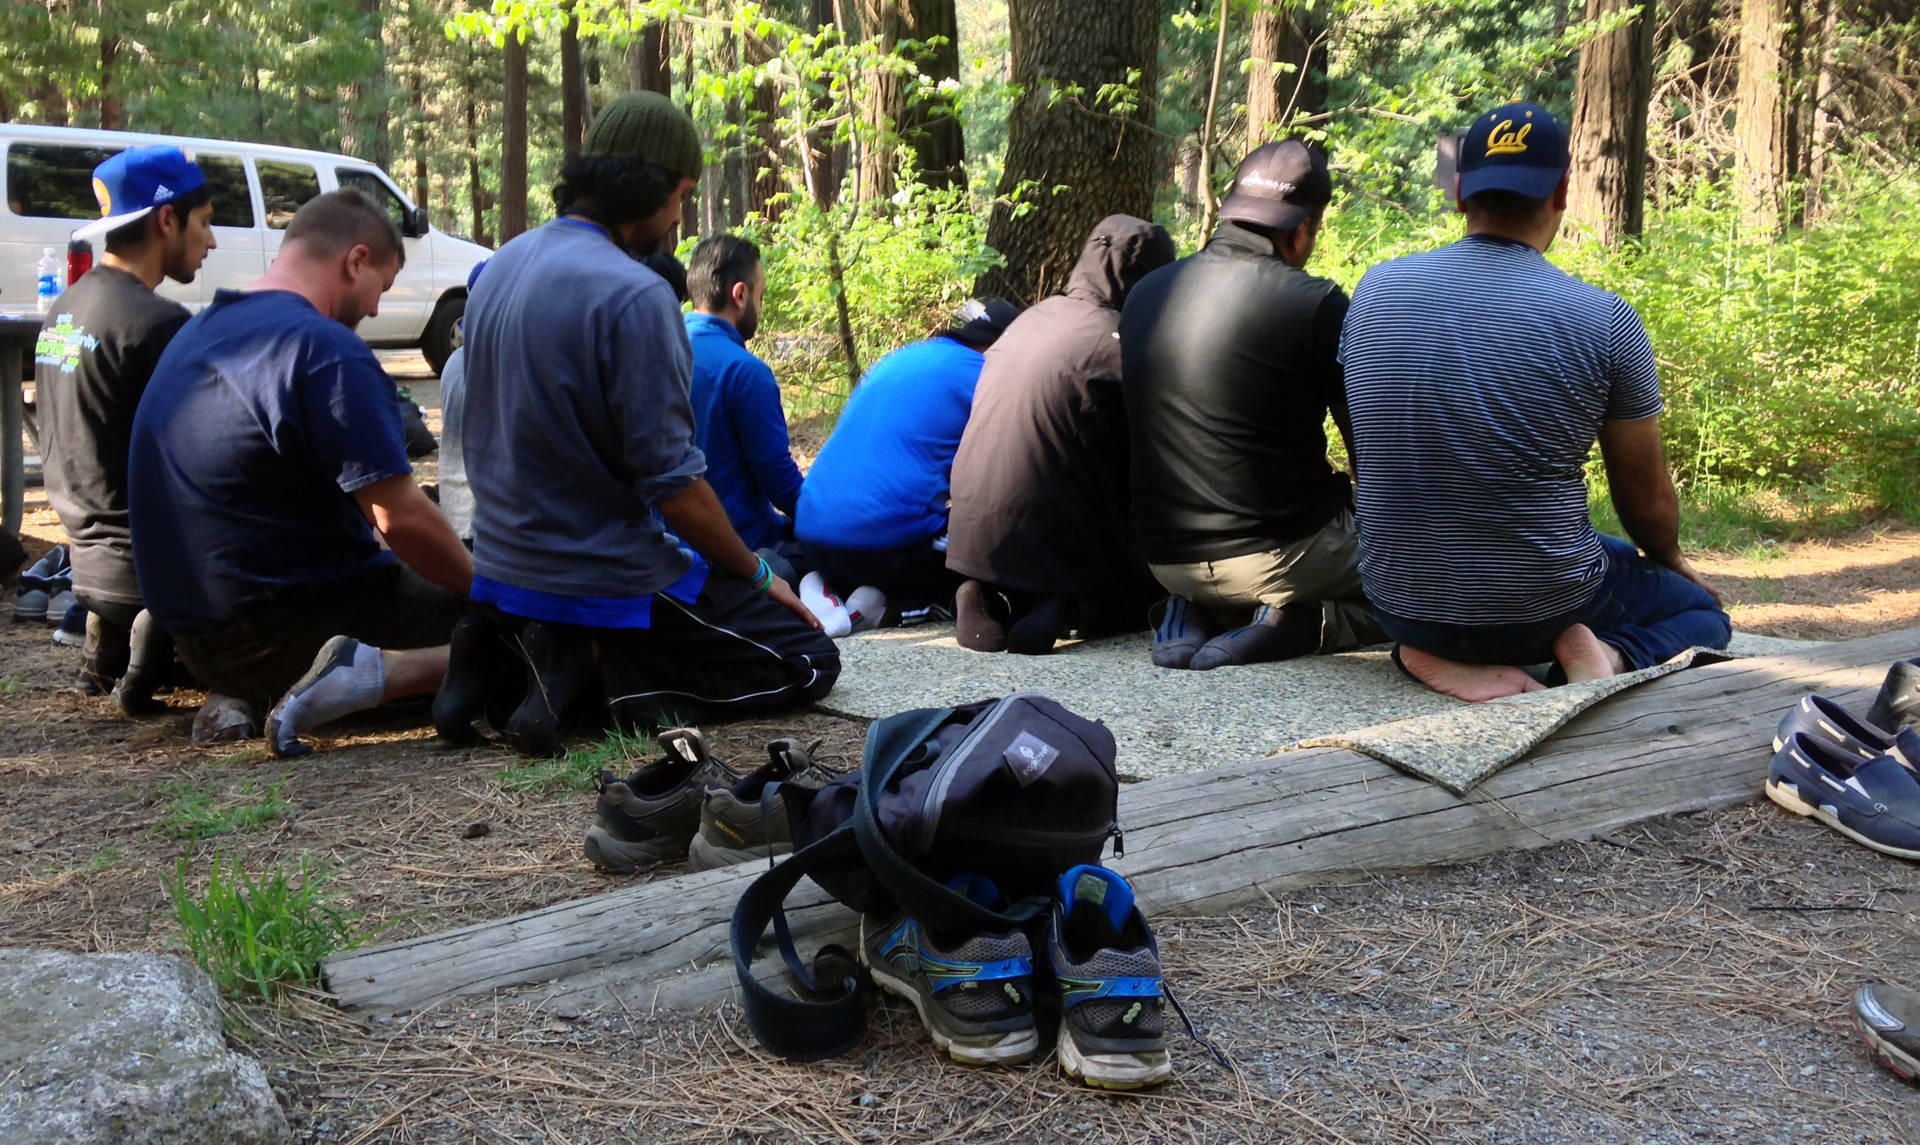 Young Muslim men pray at a campsite in Yosemite. Alice Daniel/KQED